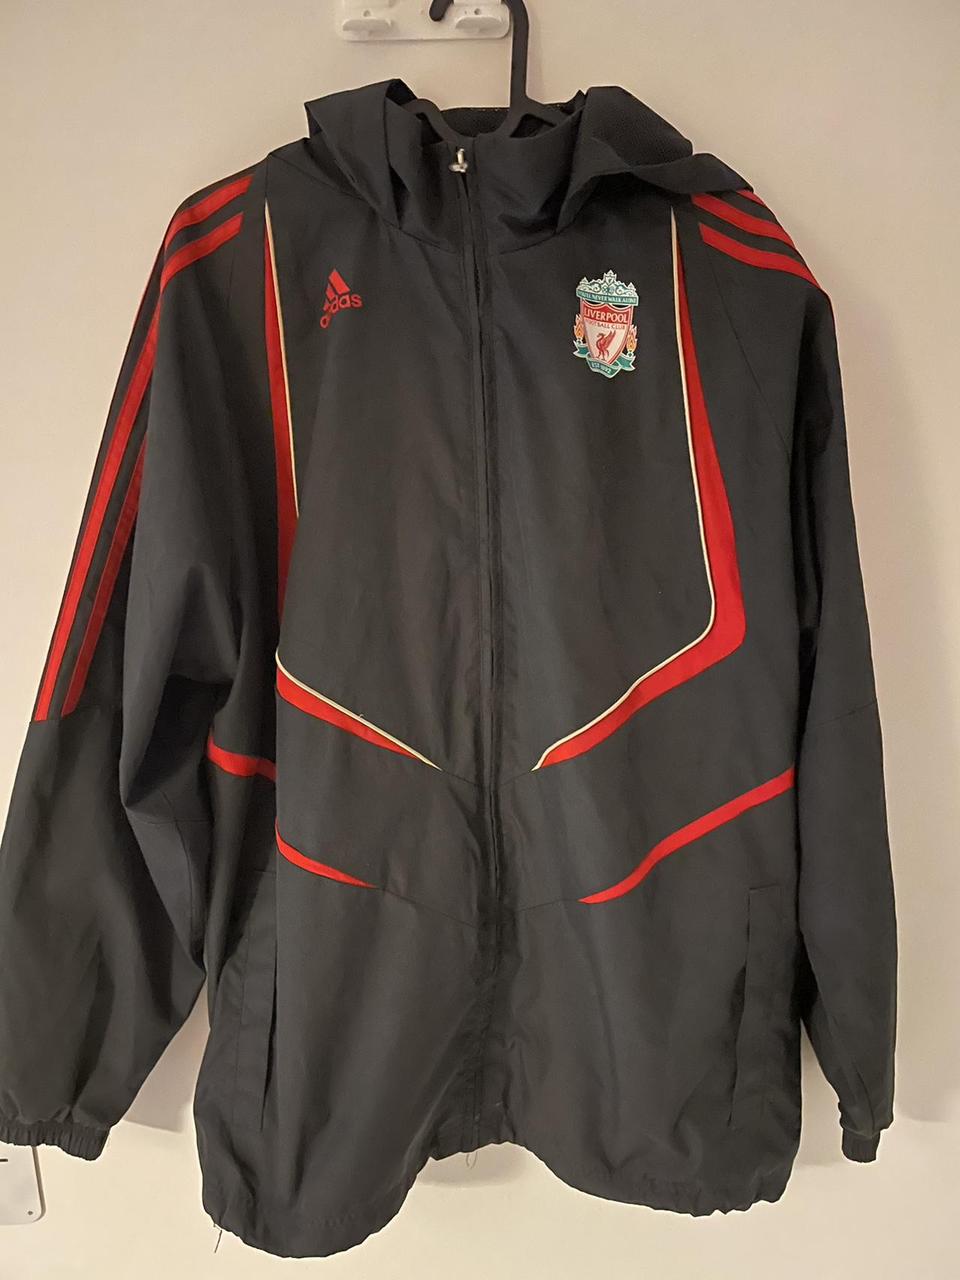 Liverpool adidas rain jacket Size 13/14 yr old,... - Depop